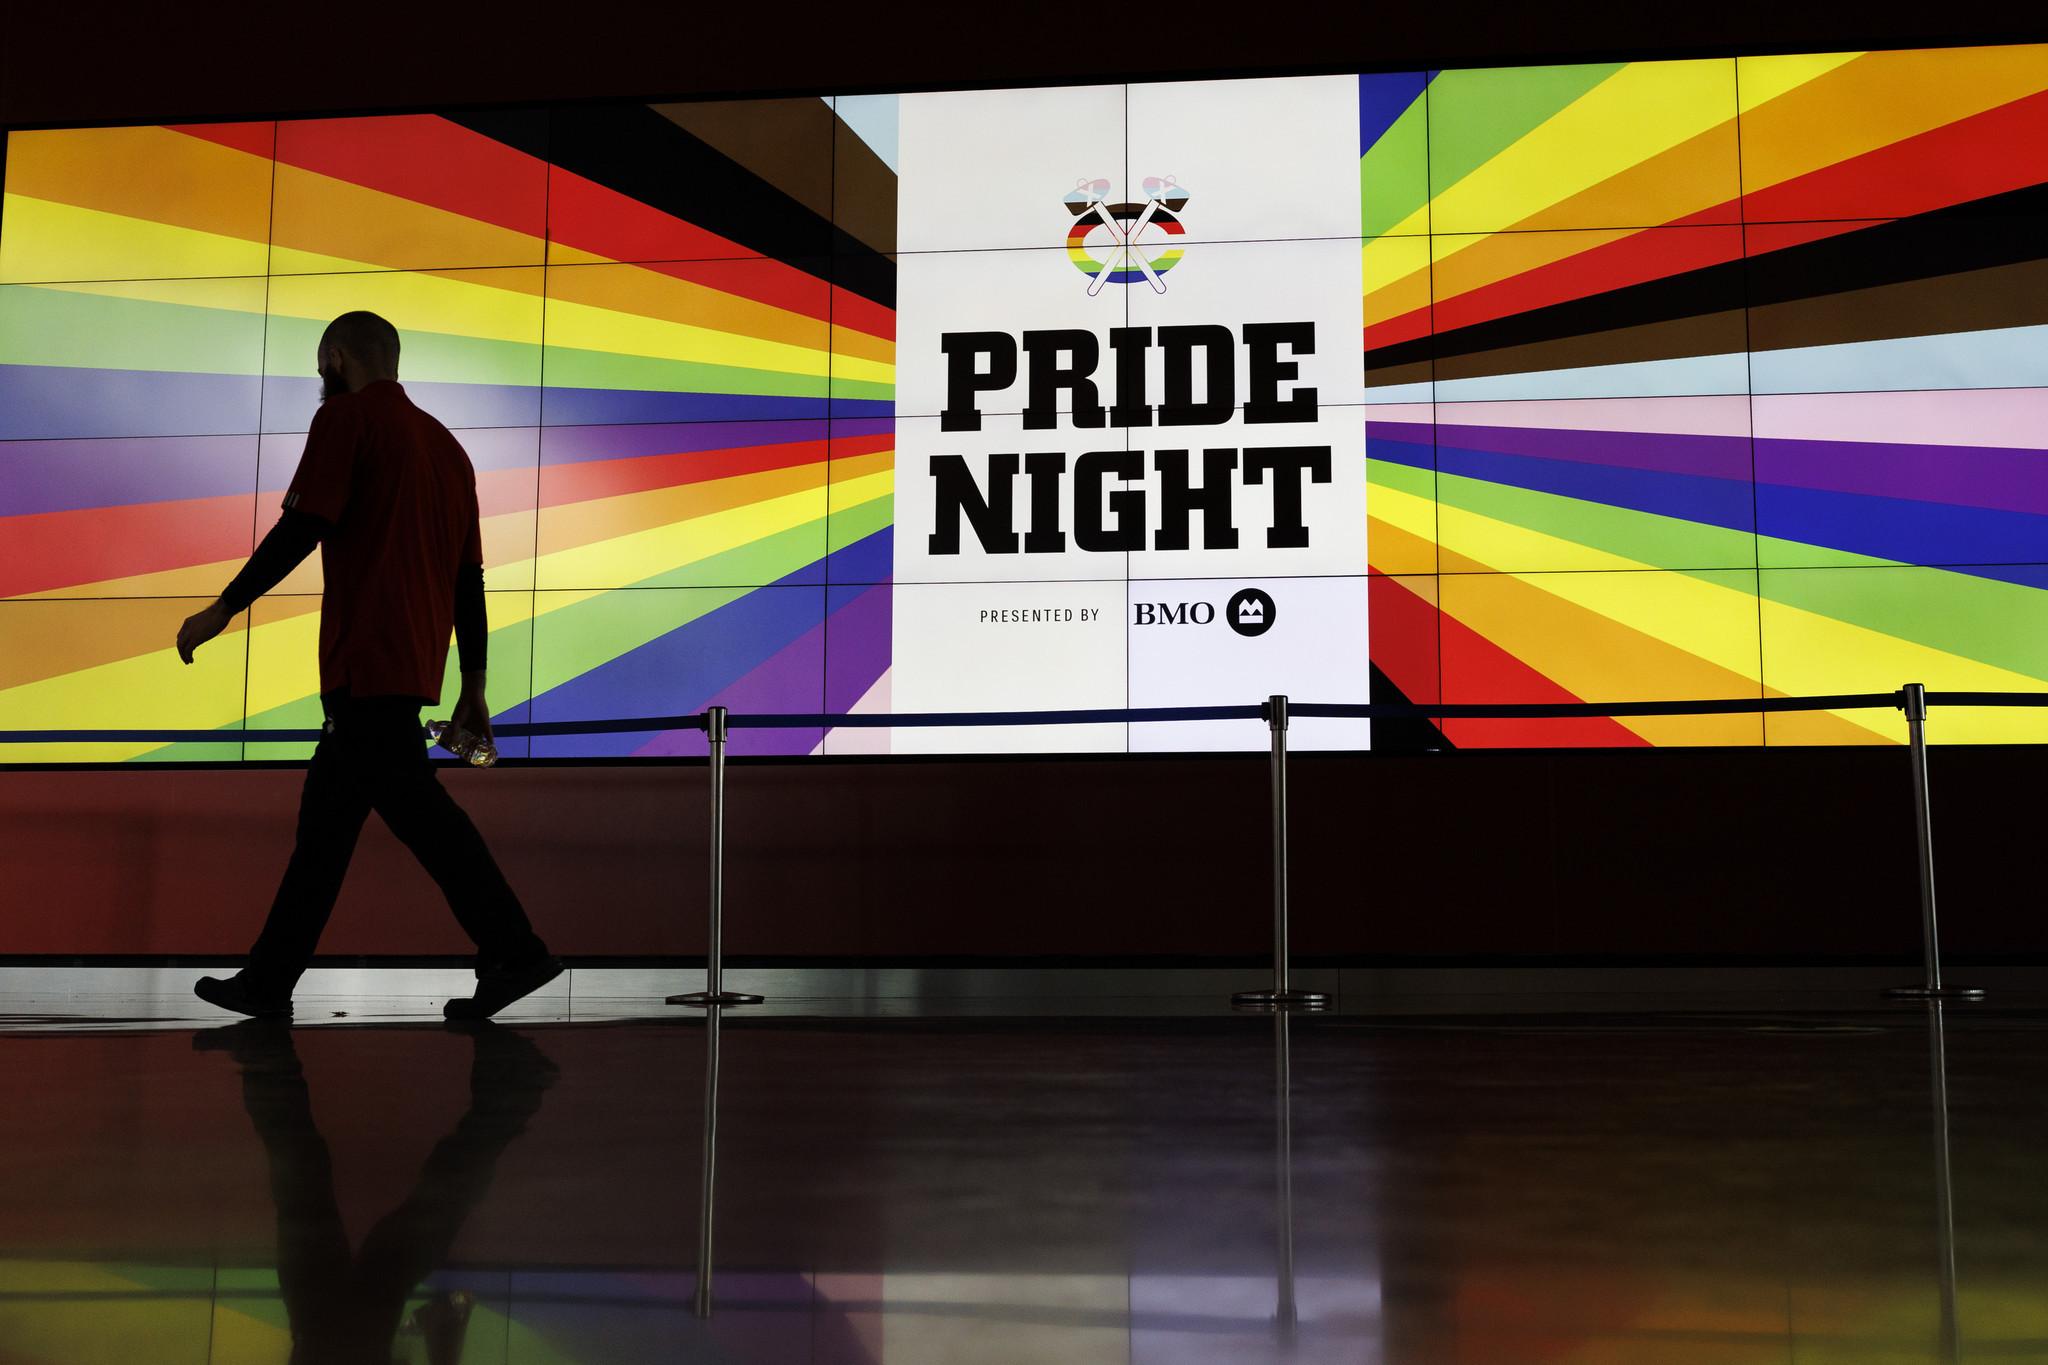 Blackhawks management's silence on Pride night decision speaks volumes -  The Athletic